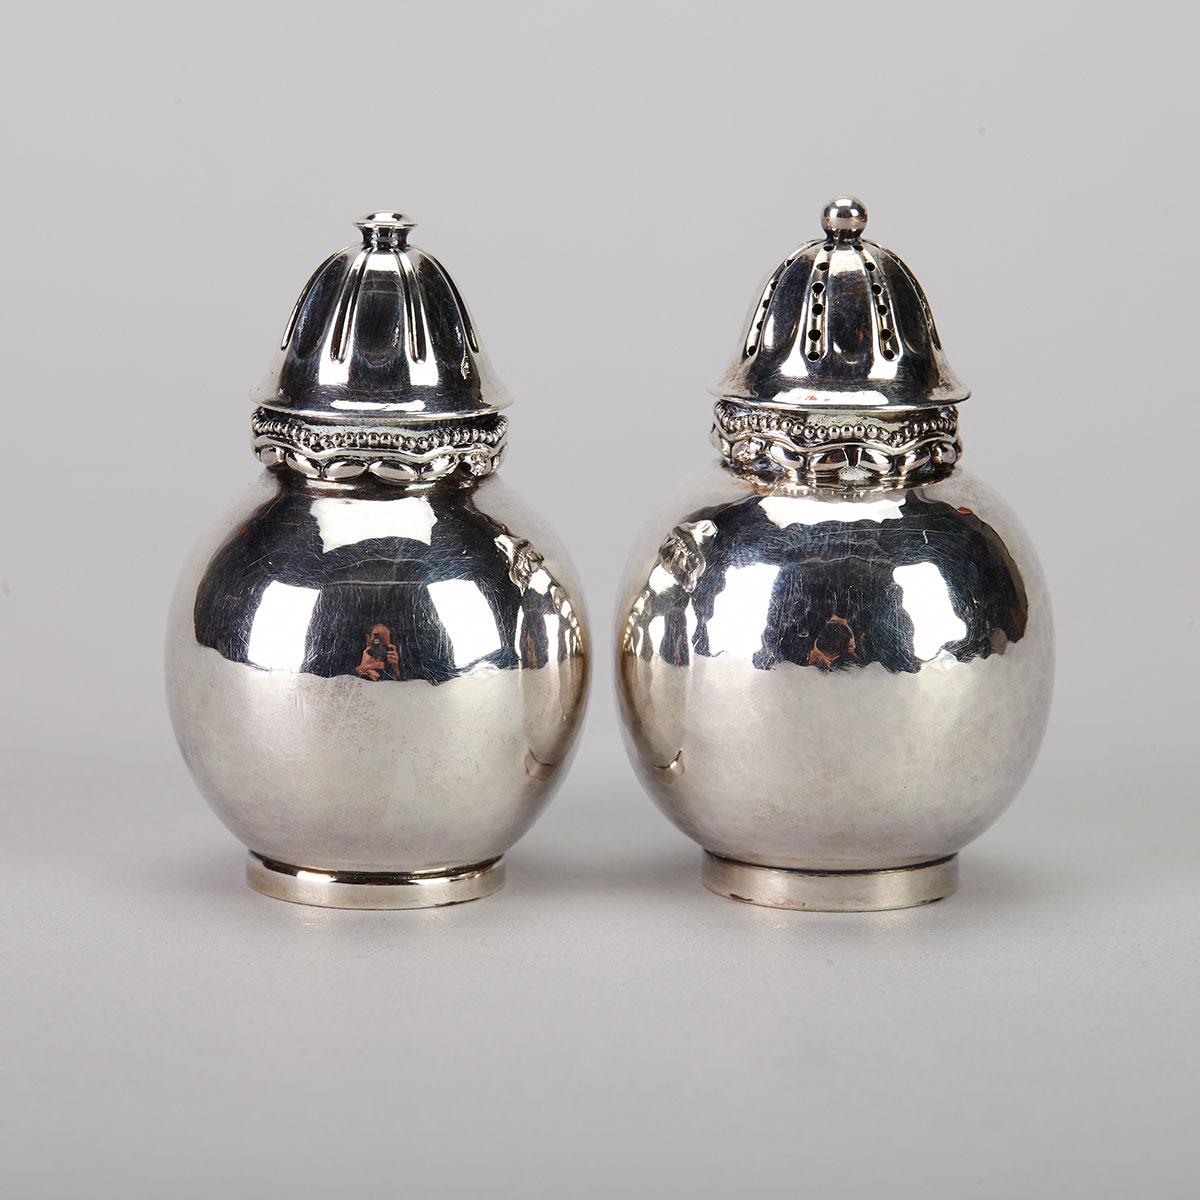 Pair of Danish Silver Salt and Pepper Casters, #581, Georg Jensen, Copenhagen, mid-20th century